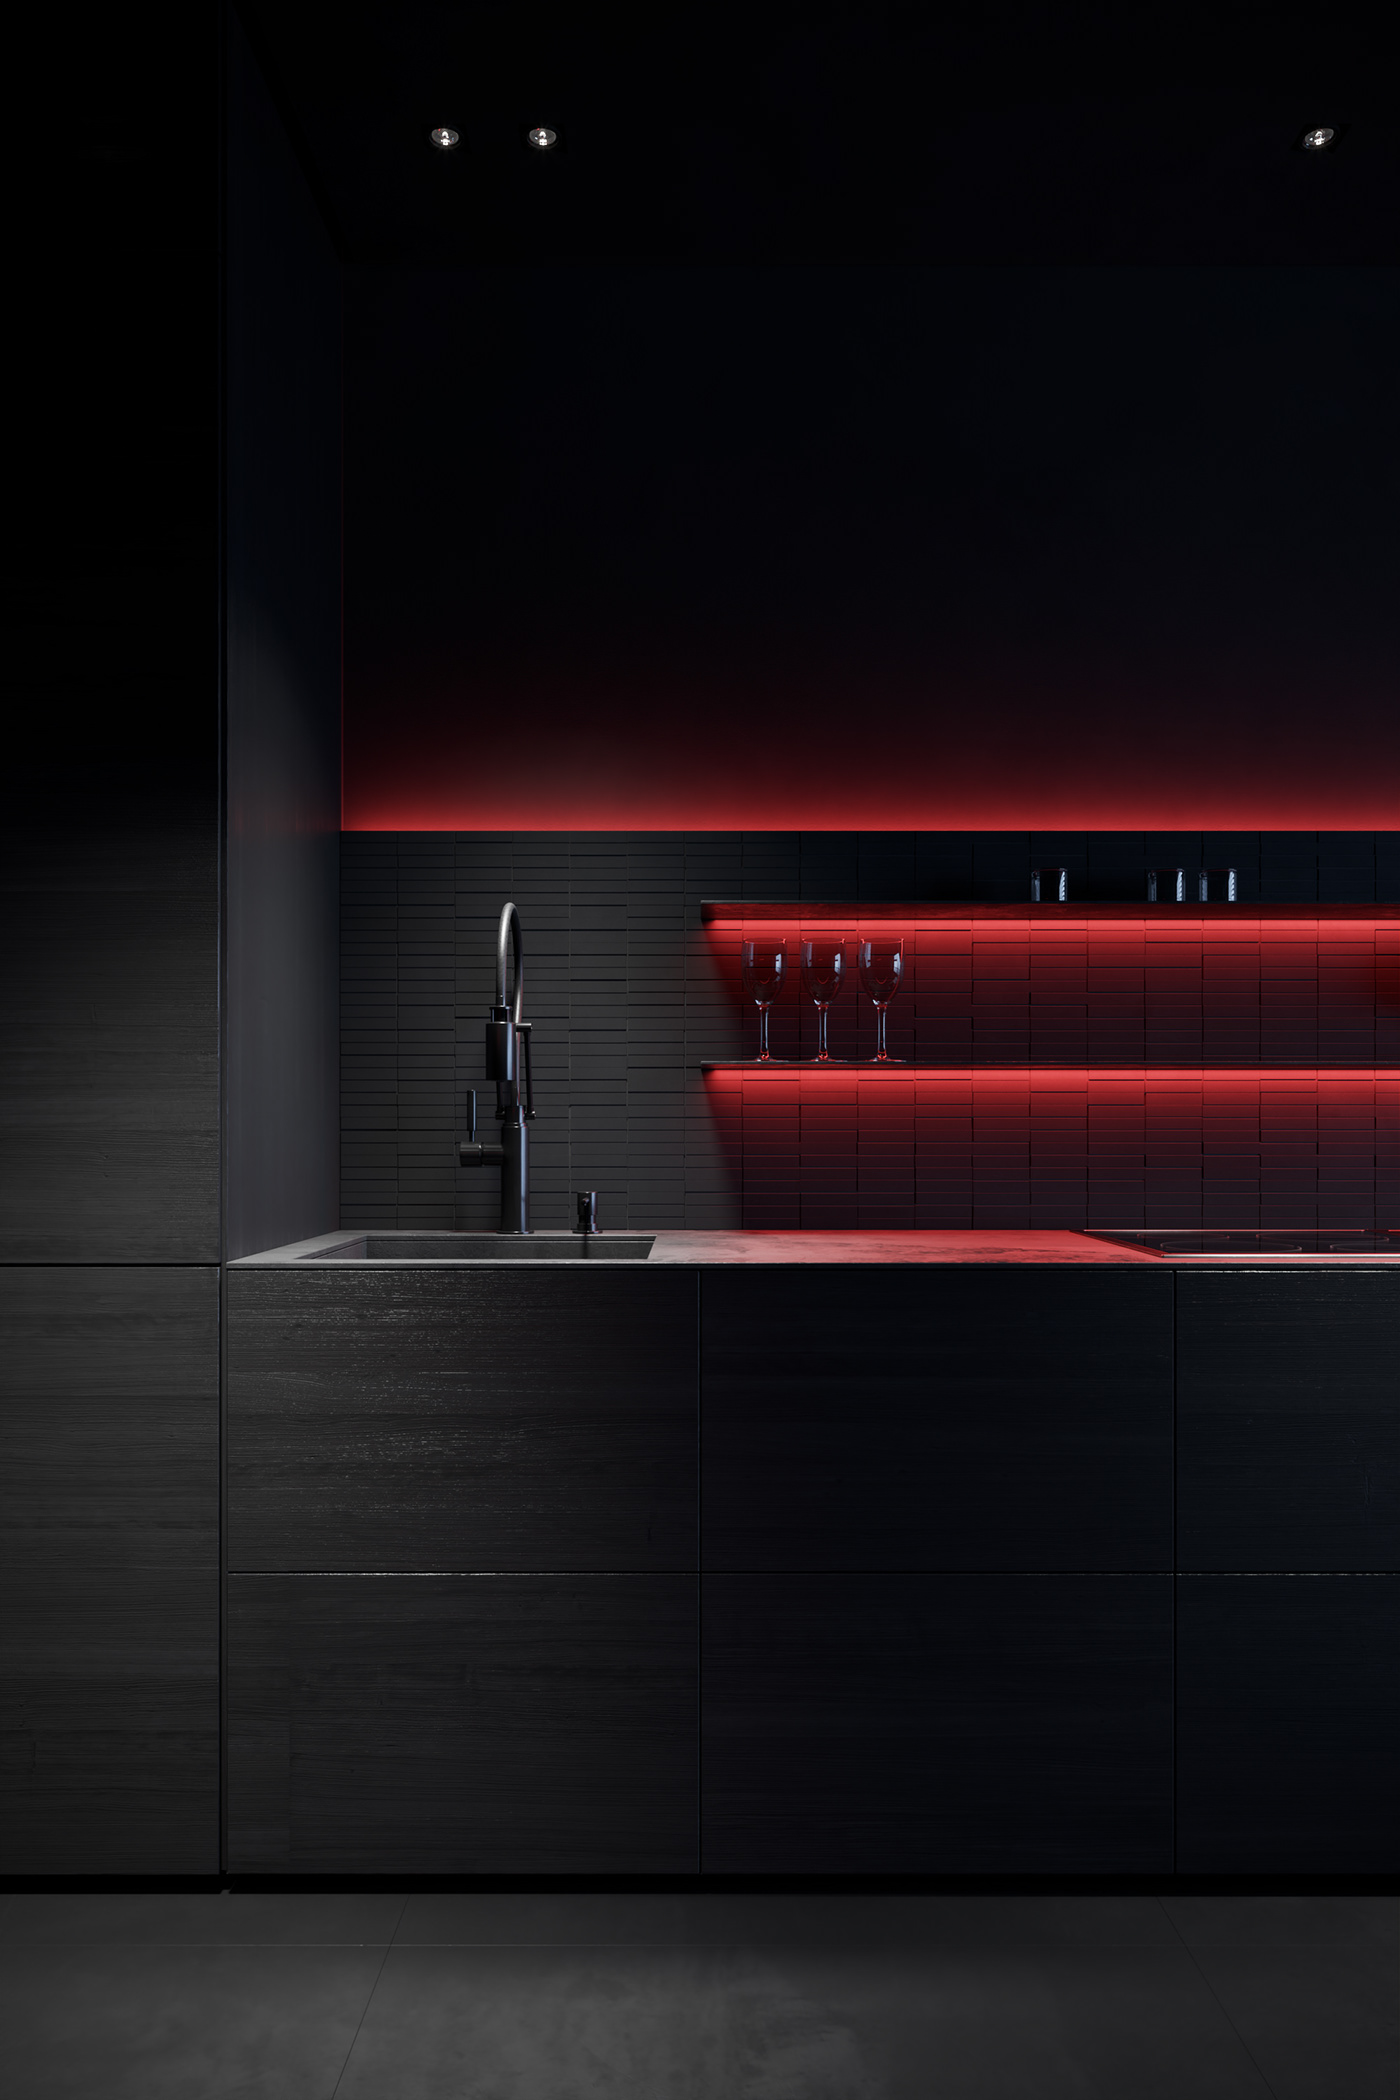 3dsmax architecture blackinterior CoronaRender  inspiration interior design  kitchen living room visualization дизайн интерьера